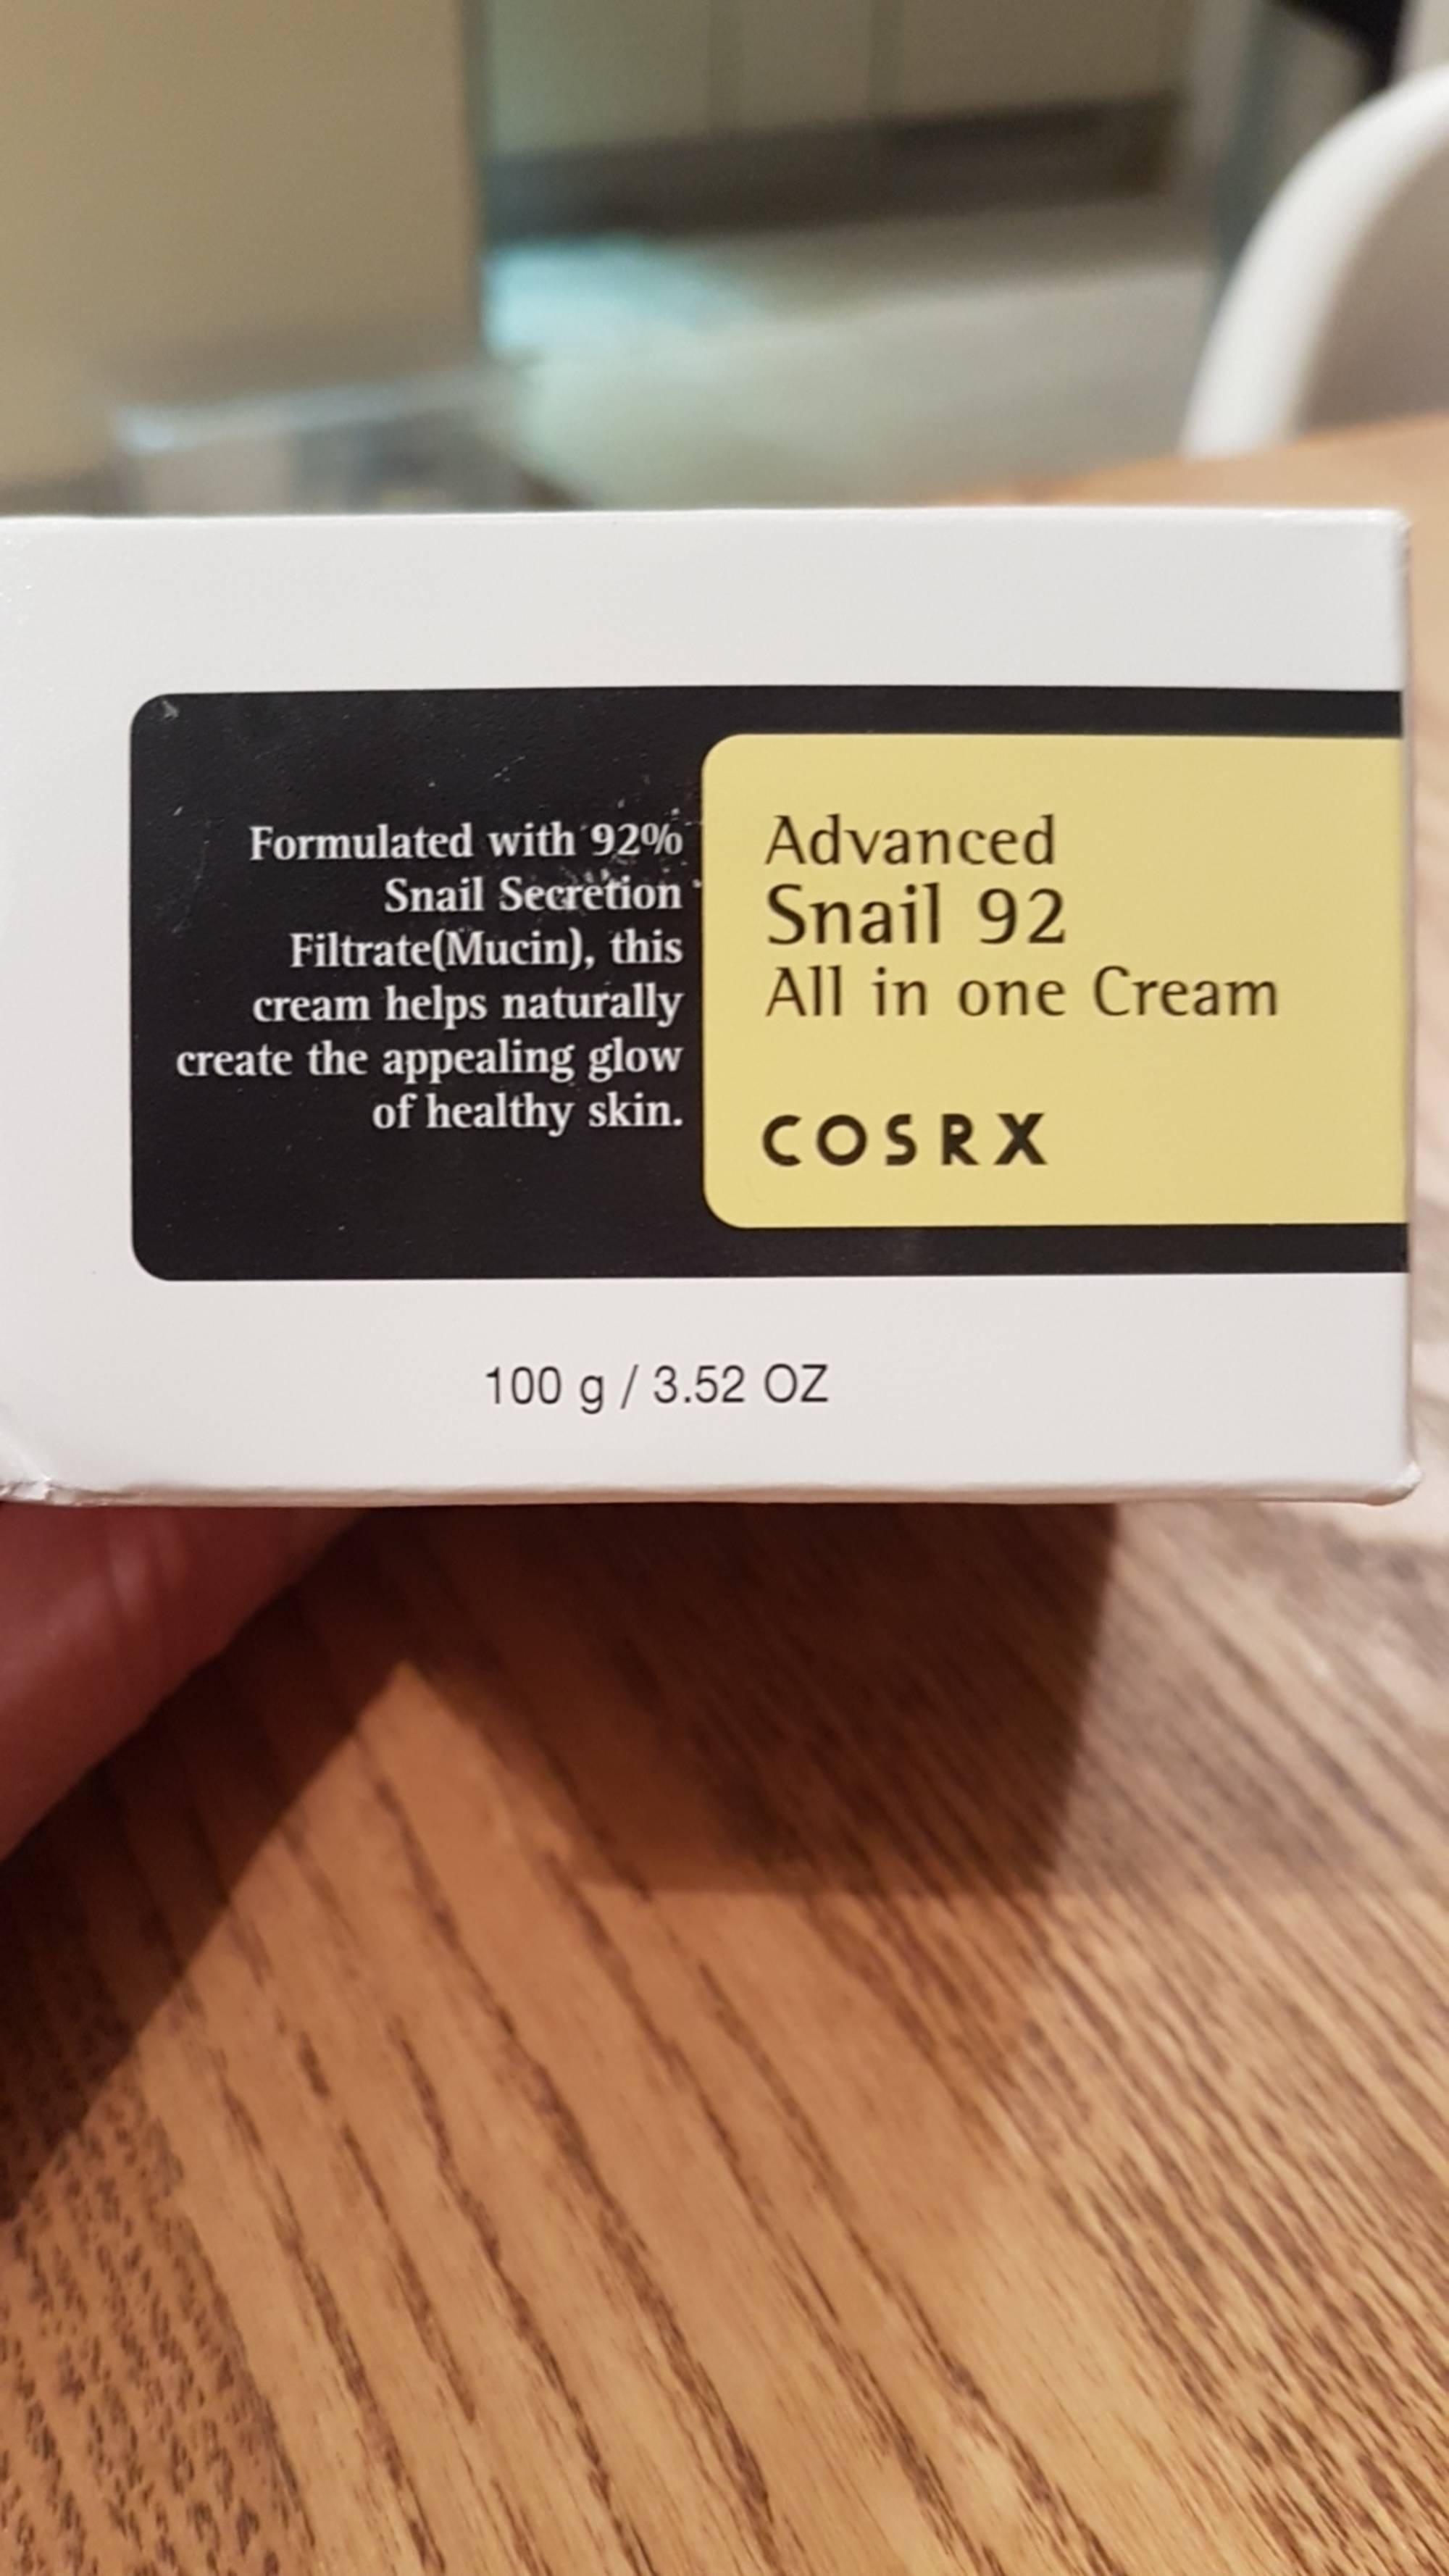 COSRX - Advanced snail 92 all in one cream